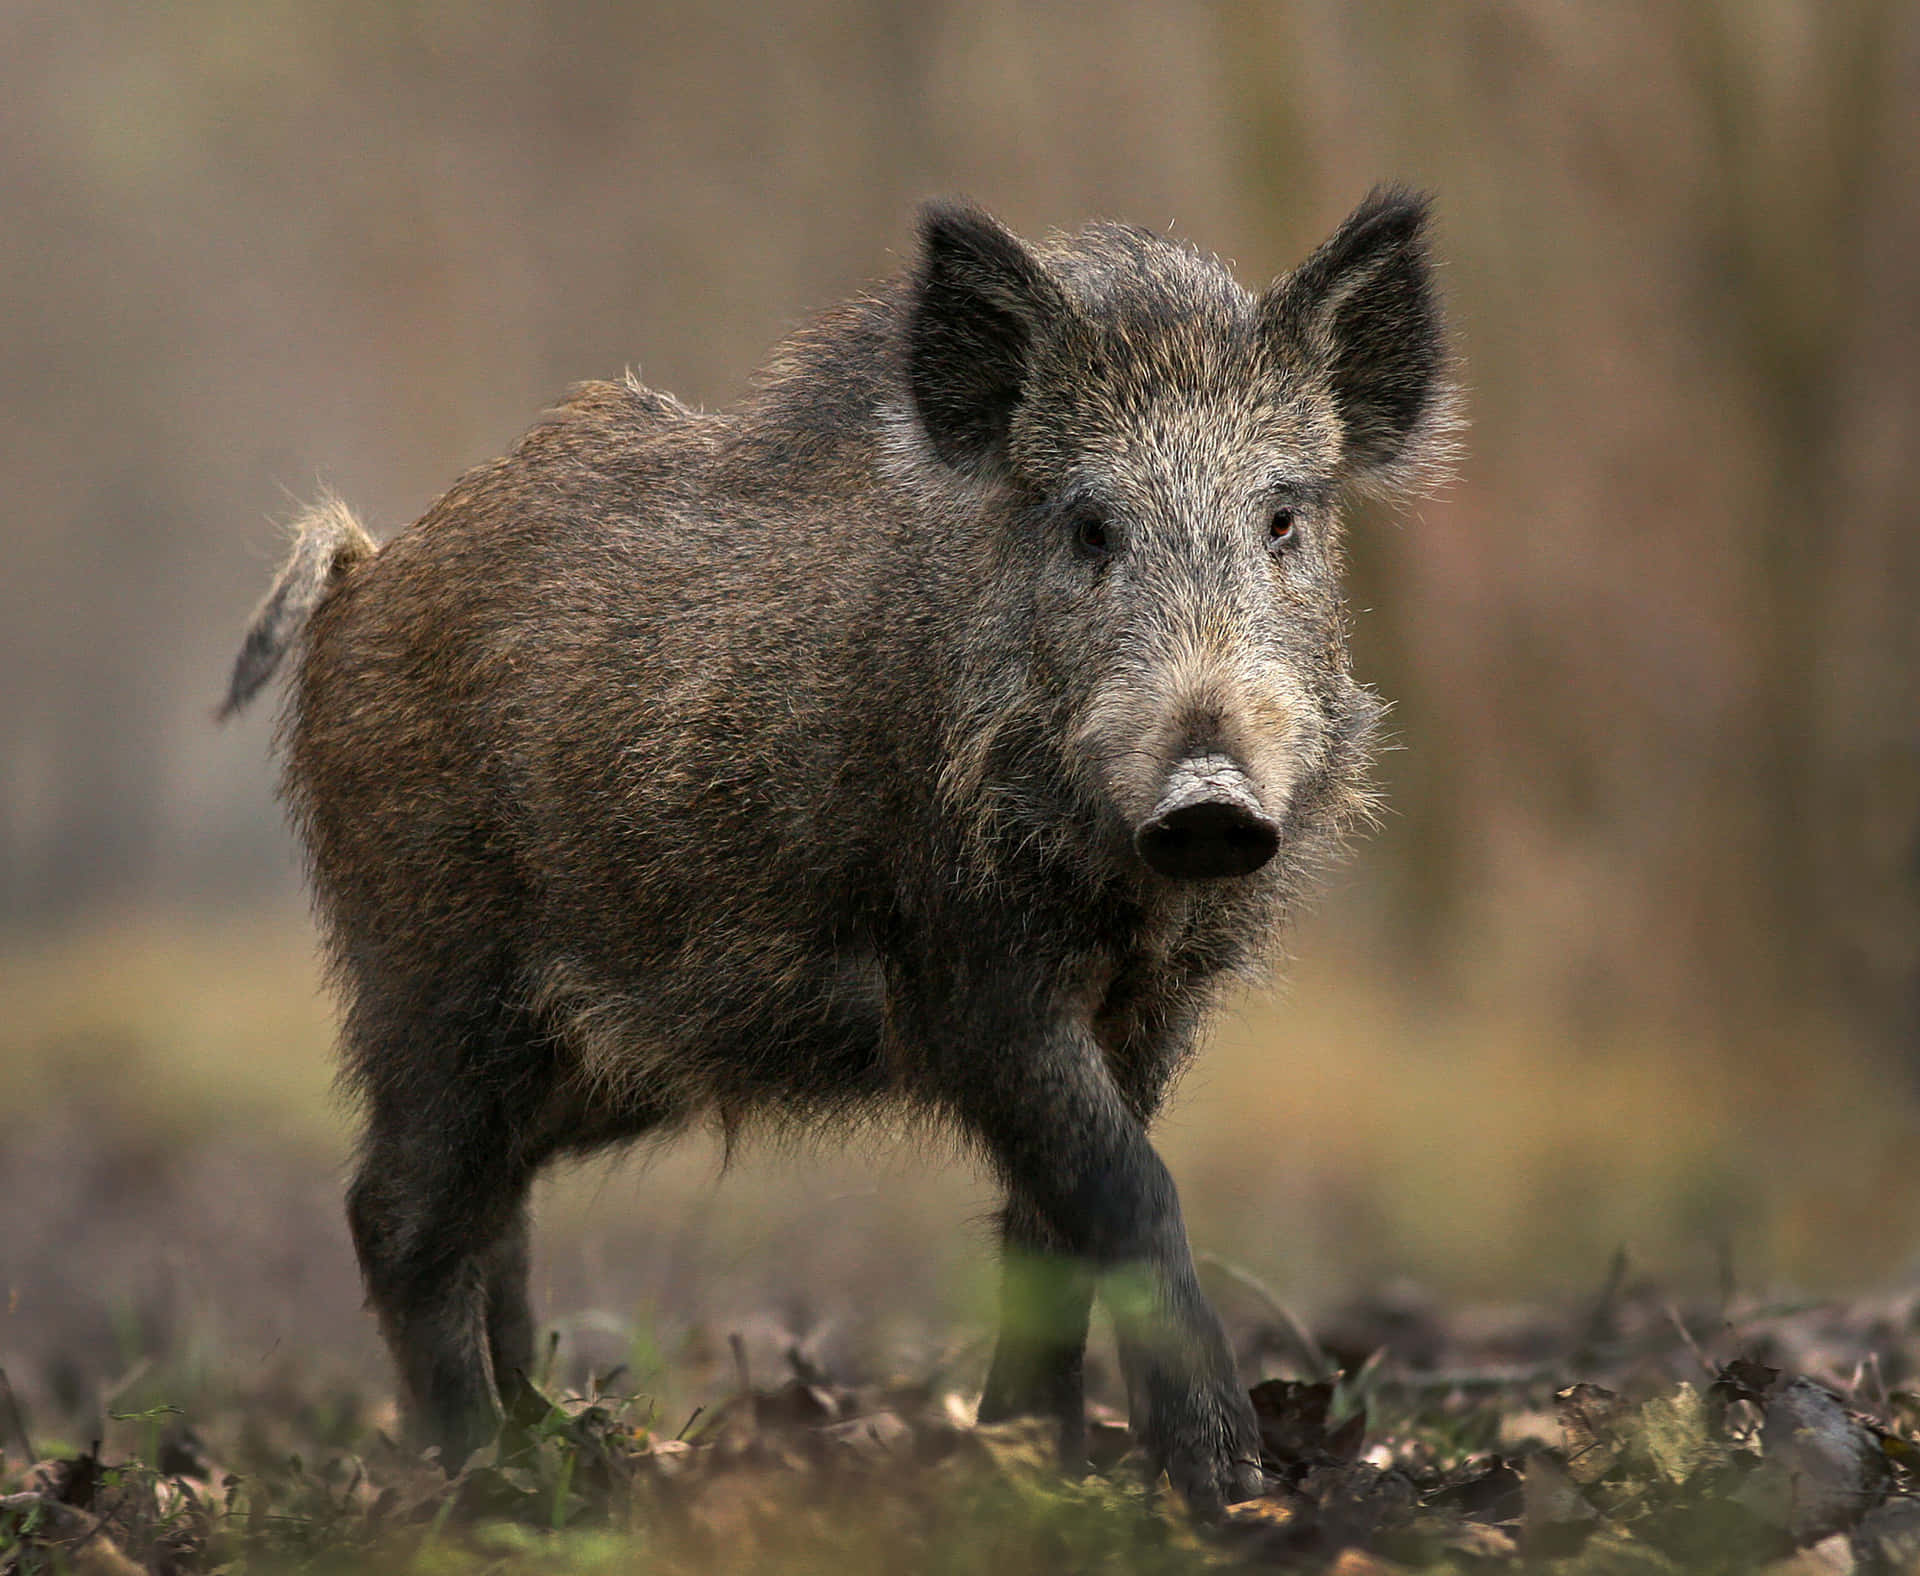 A wild boar roaming through a meadow.